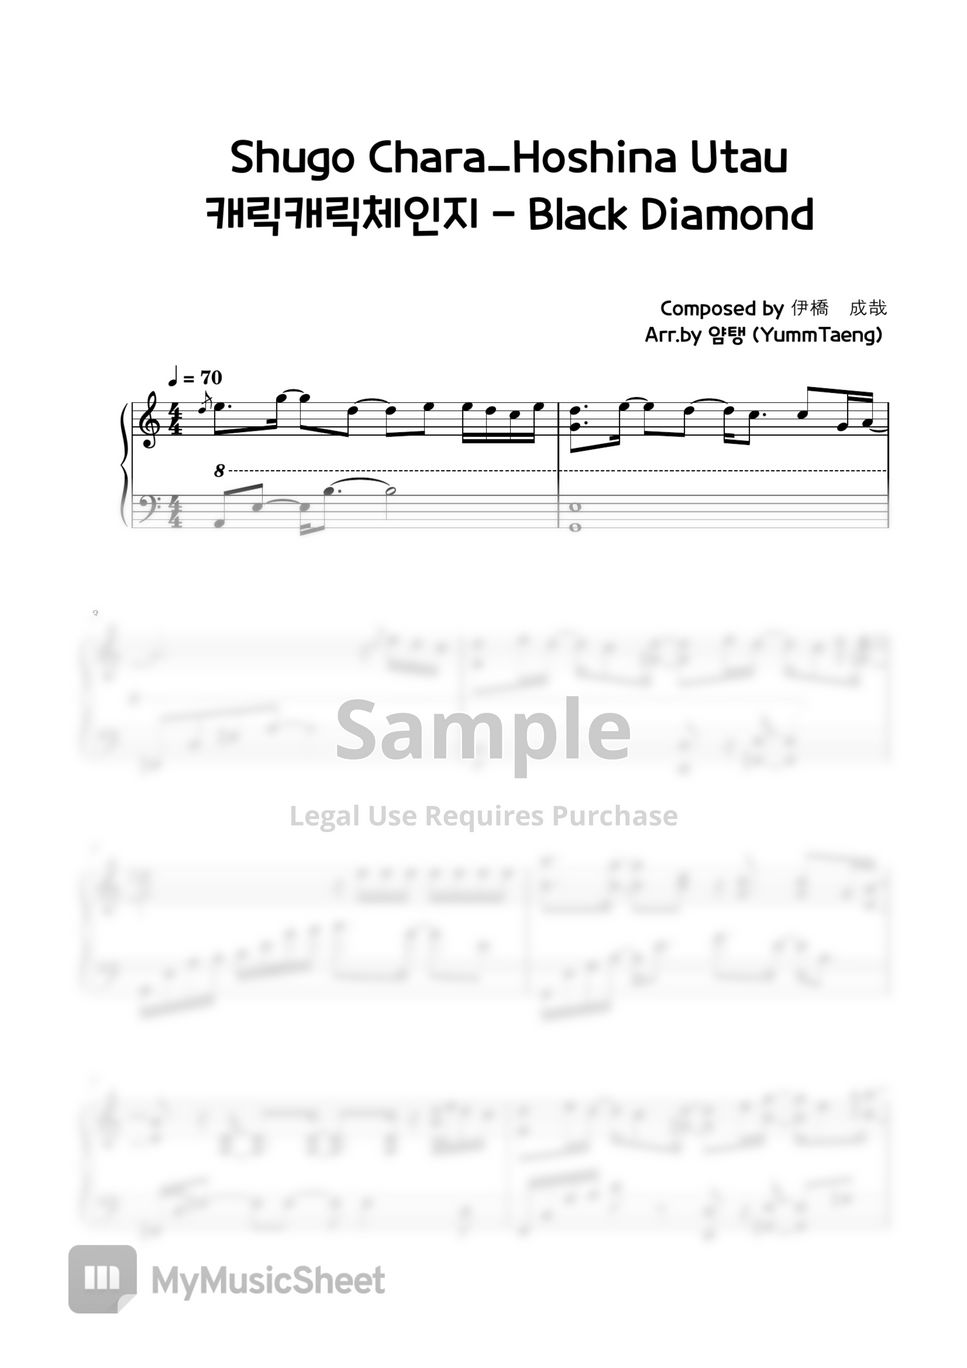 Shugo Chara - Black Diamond by YummTaeng